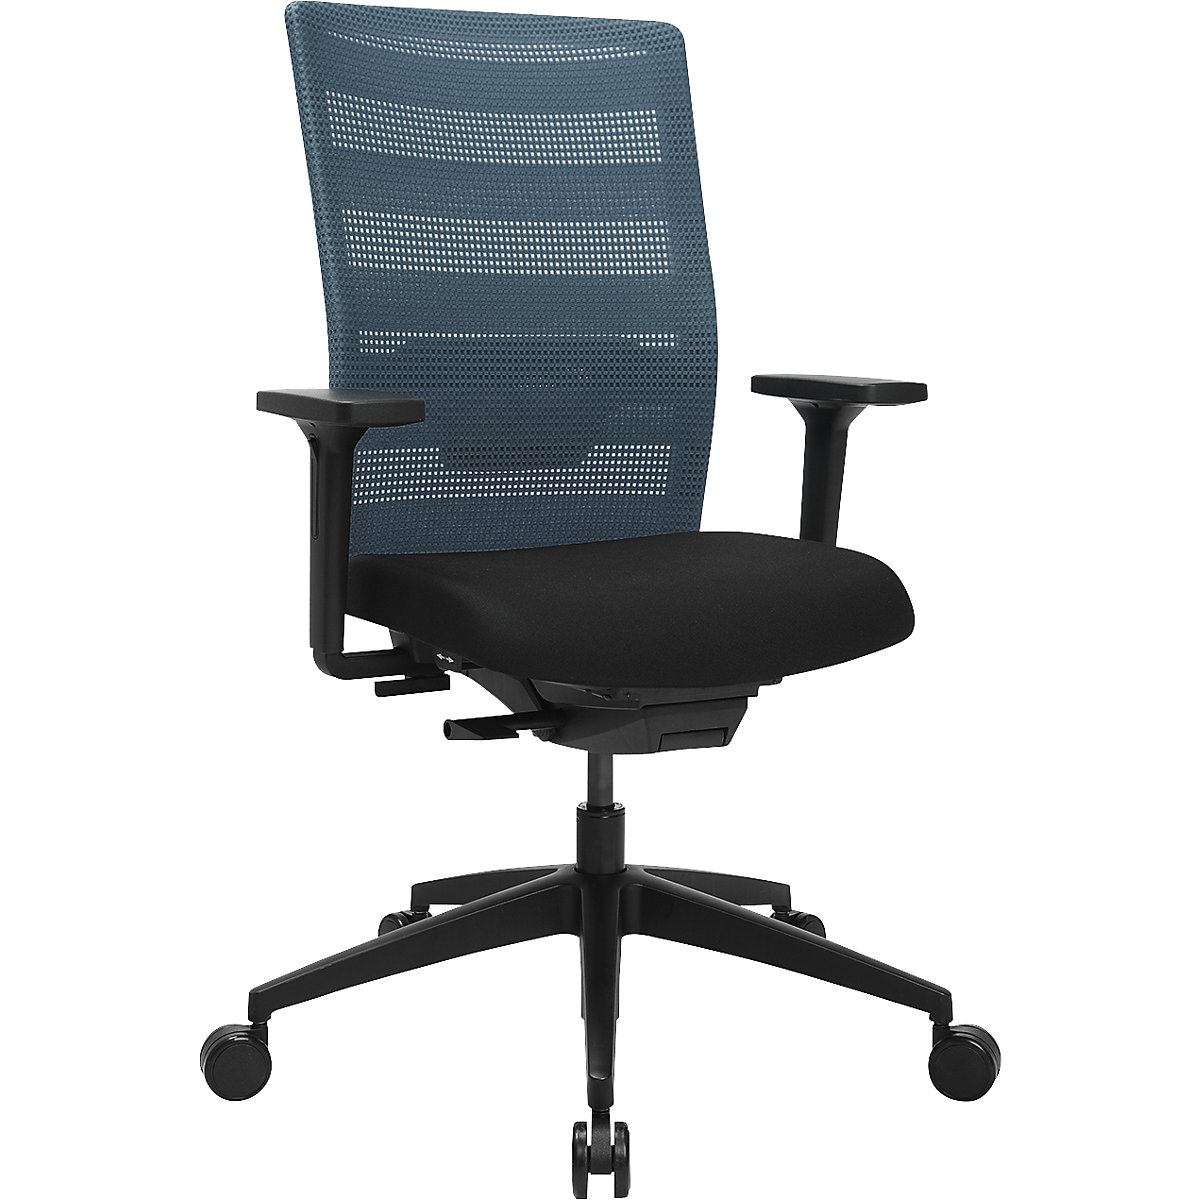 AirWork office swivel chair - Topstar